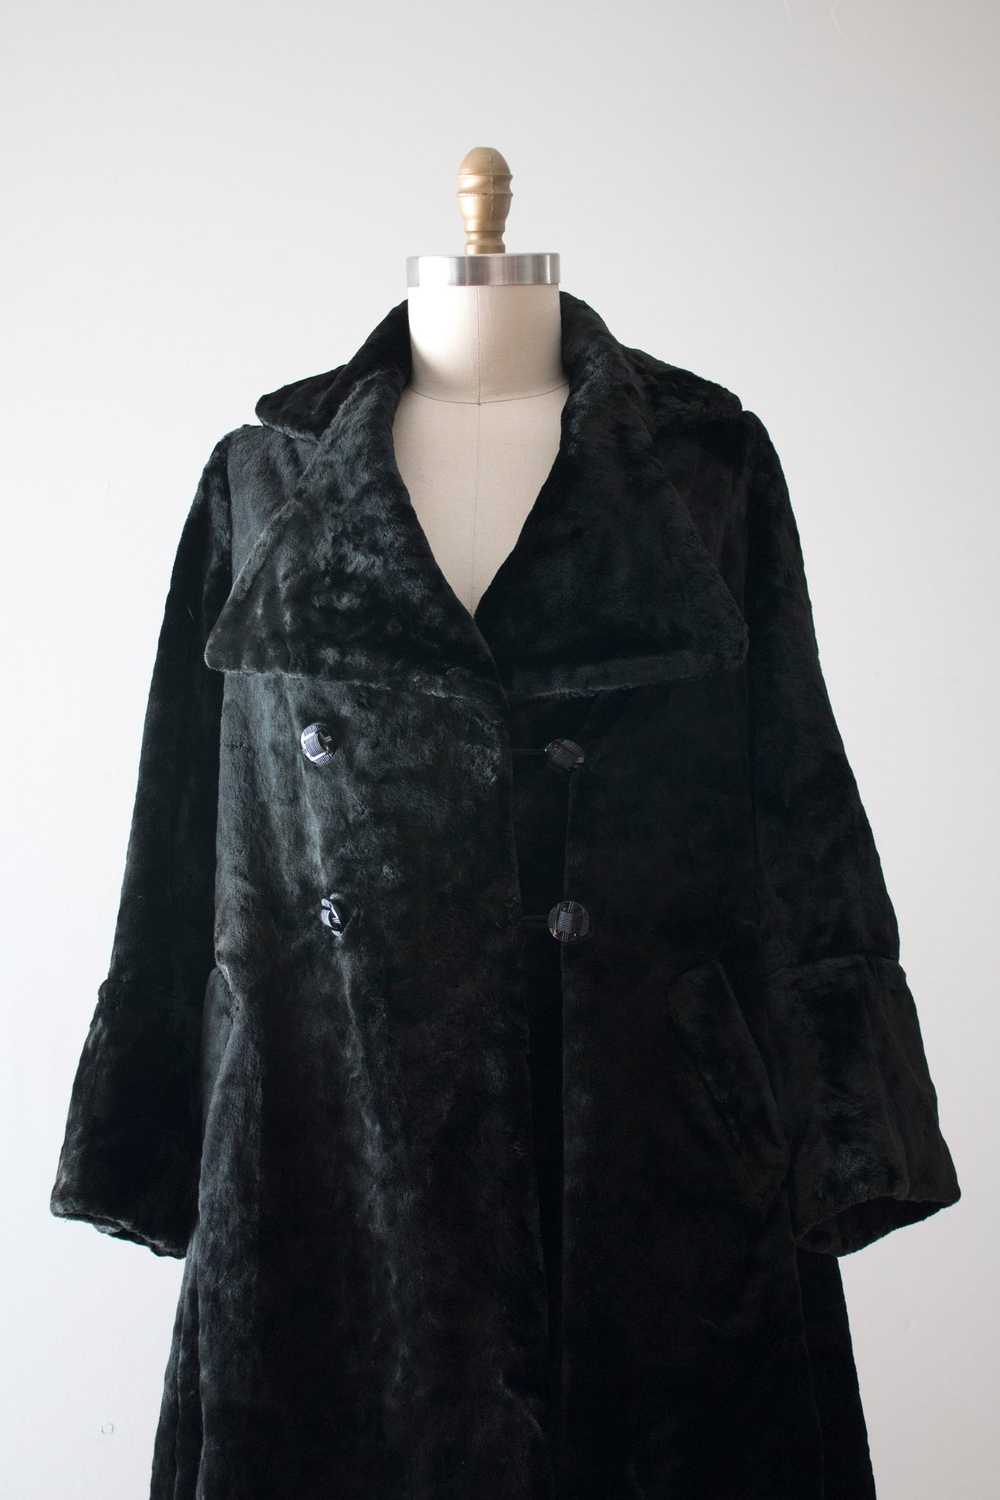 MARKED DOWN vintage 1920s faux fur coat - image 2